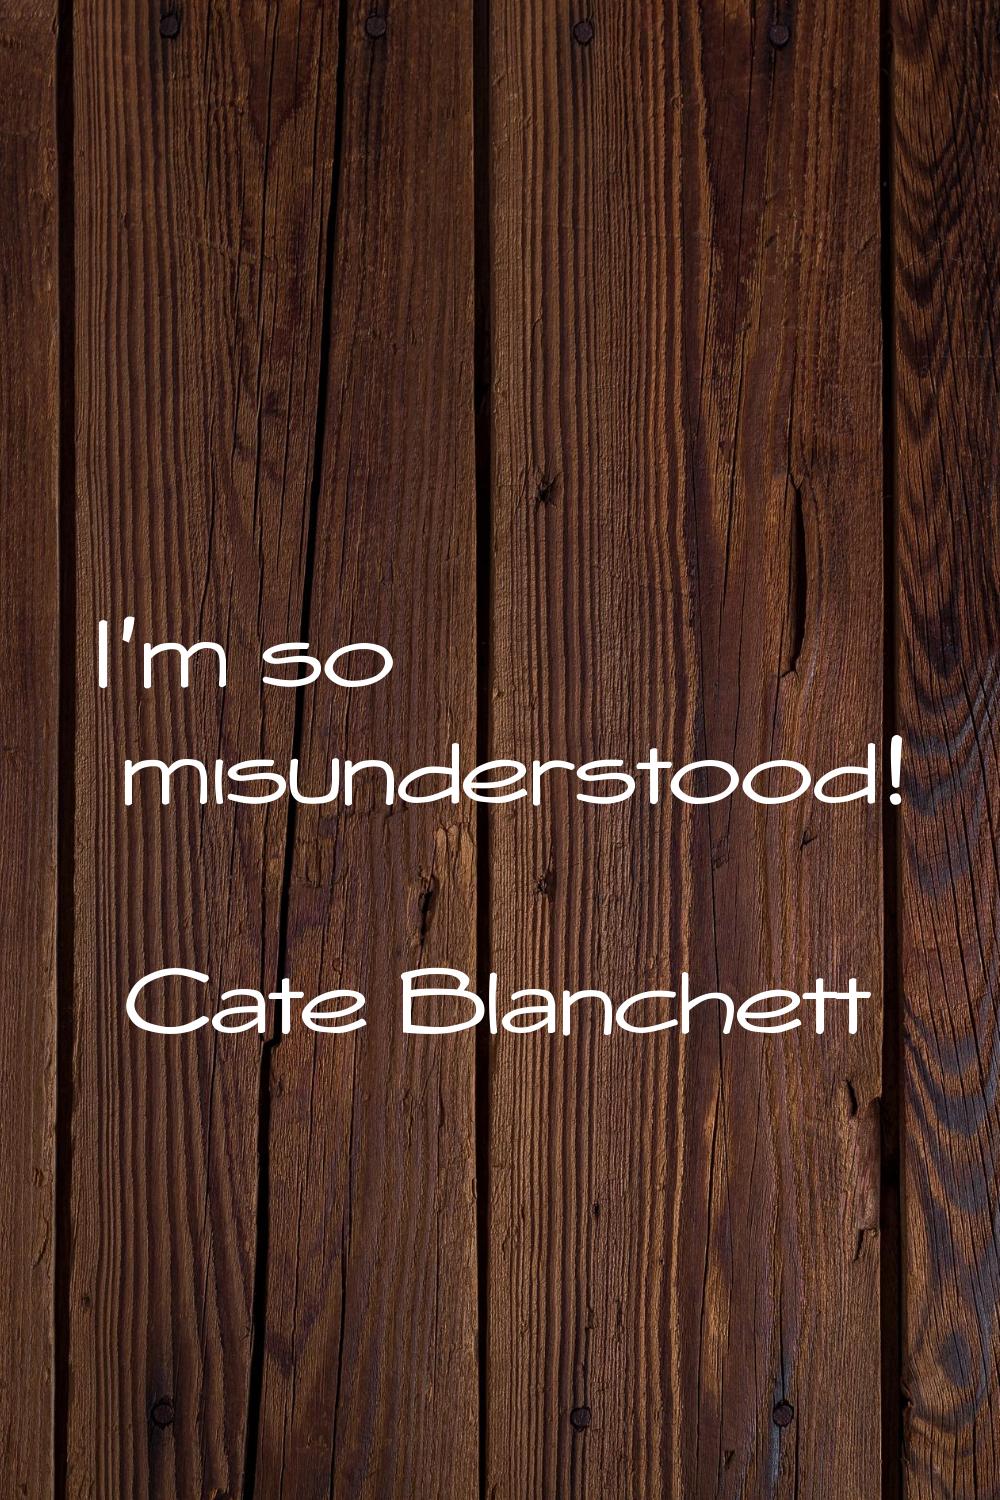 I'm so misunderstood!